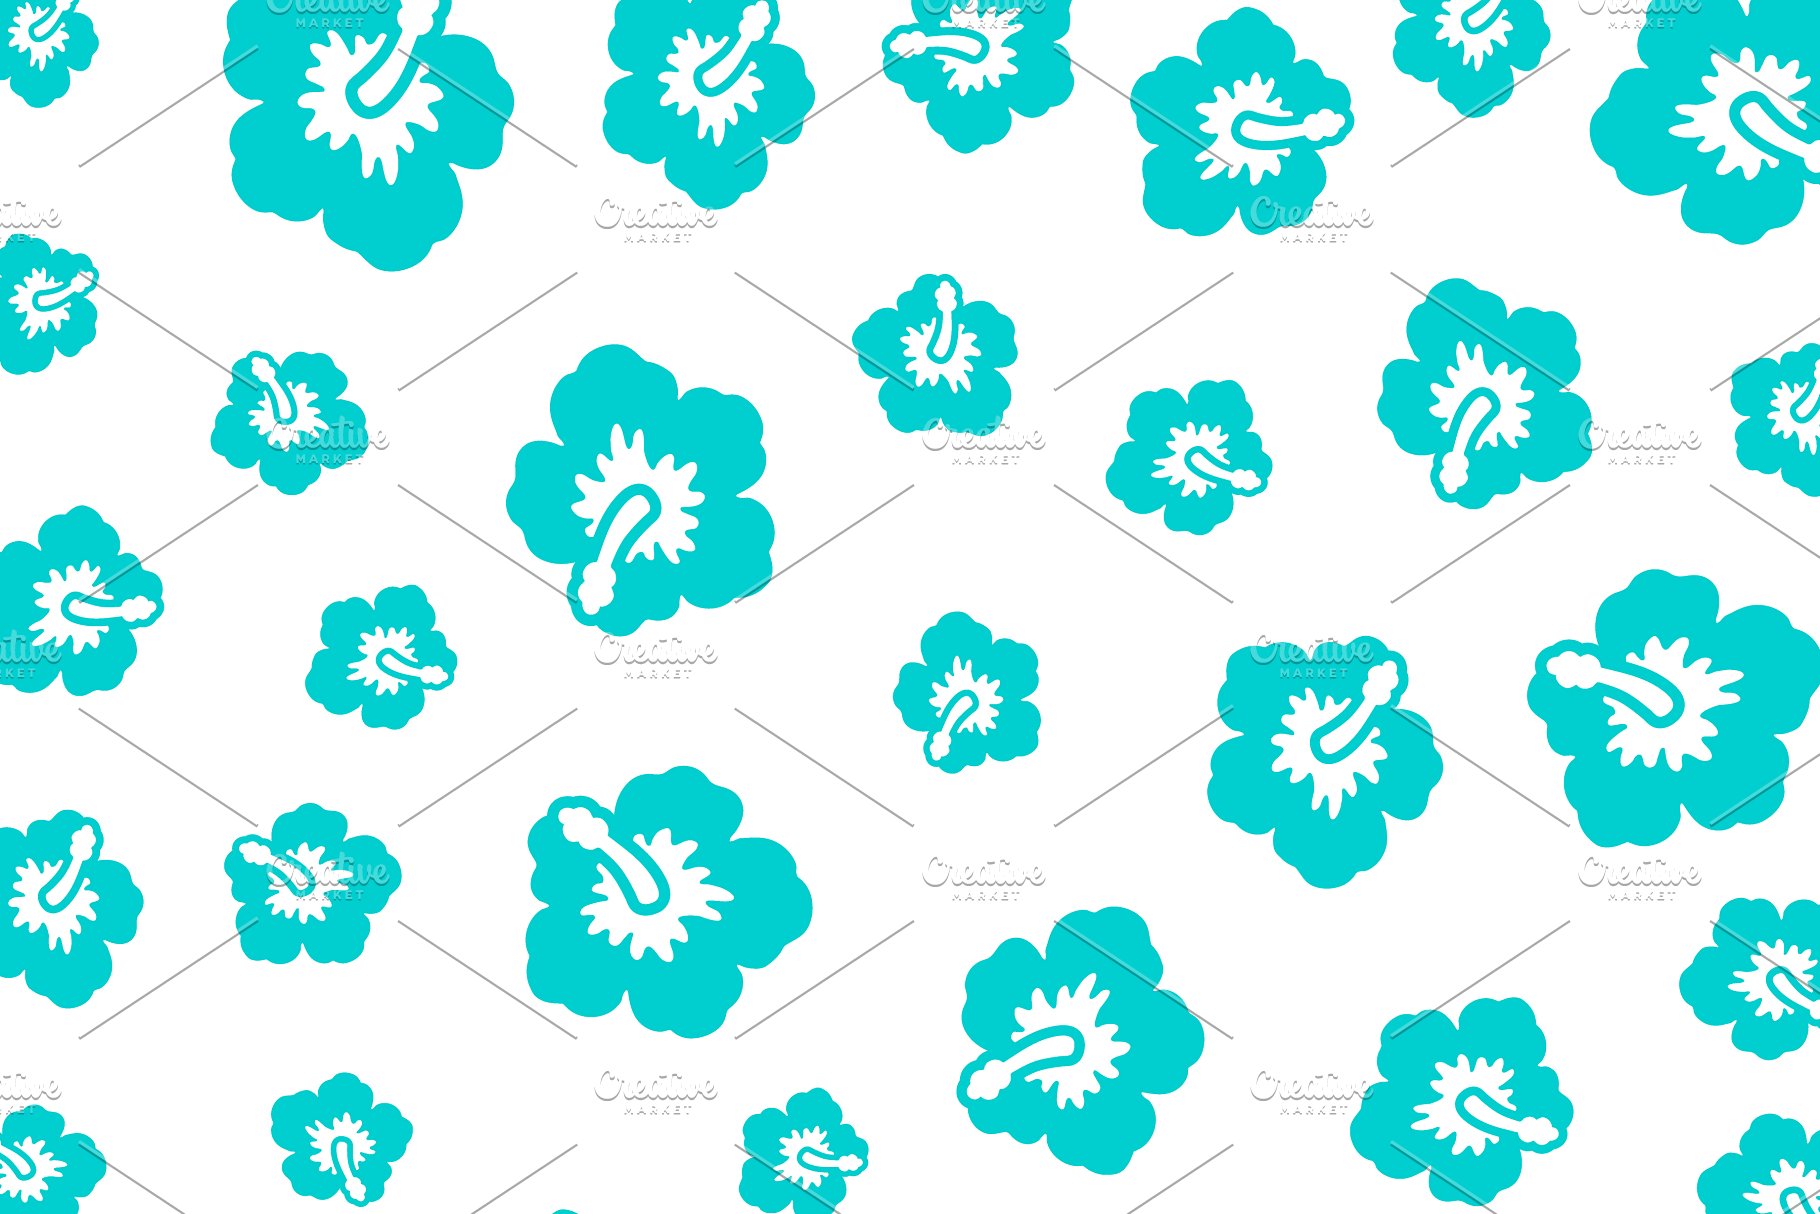 60种配色1440款花卉图案纹理 1,440 Floral Patterns in 60 Colors插图(13)